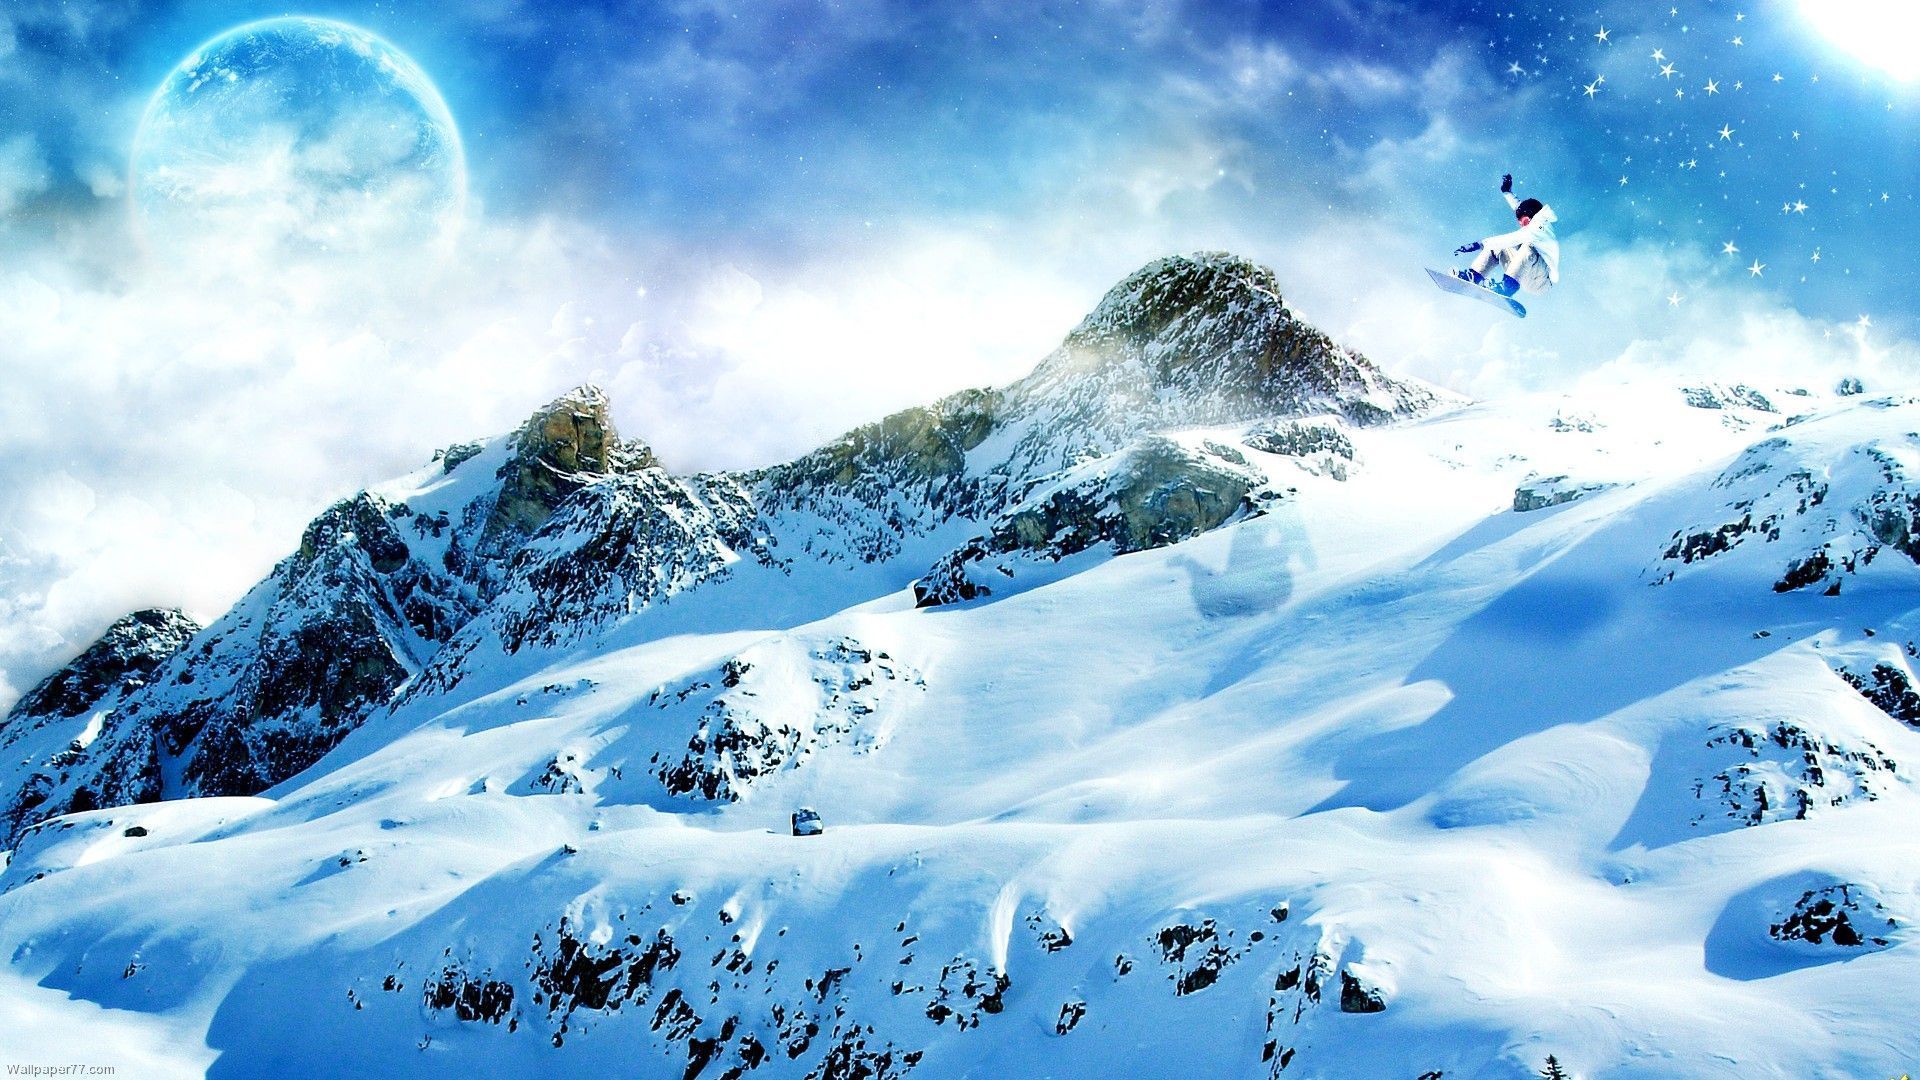 Snowboarding-Wallpaper-HD.jpg